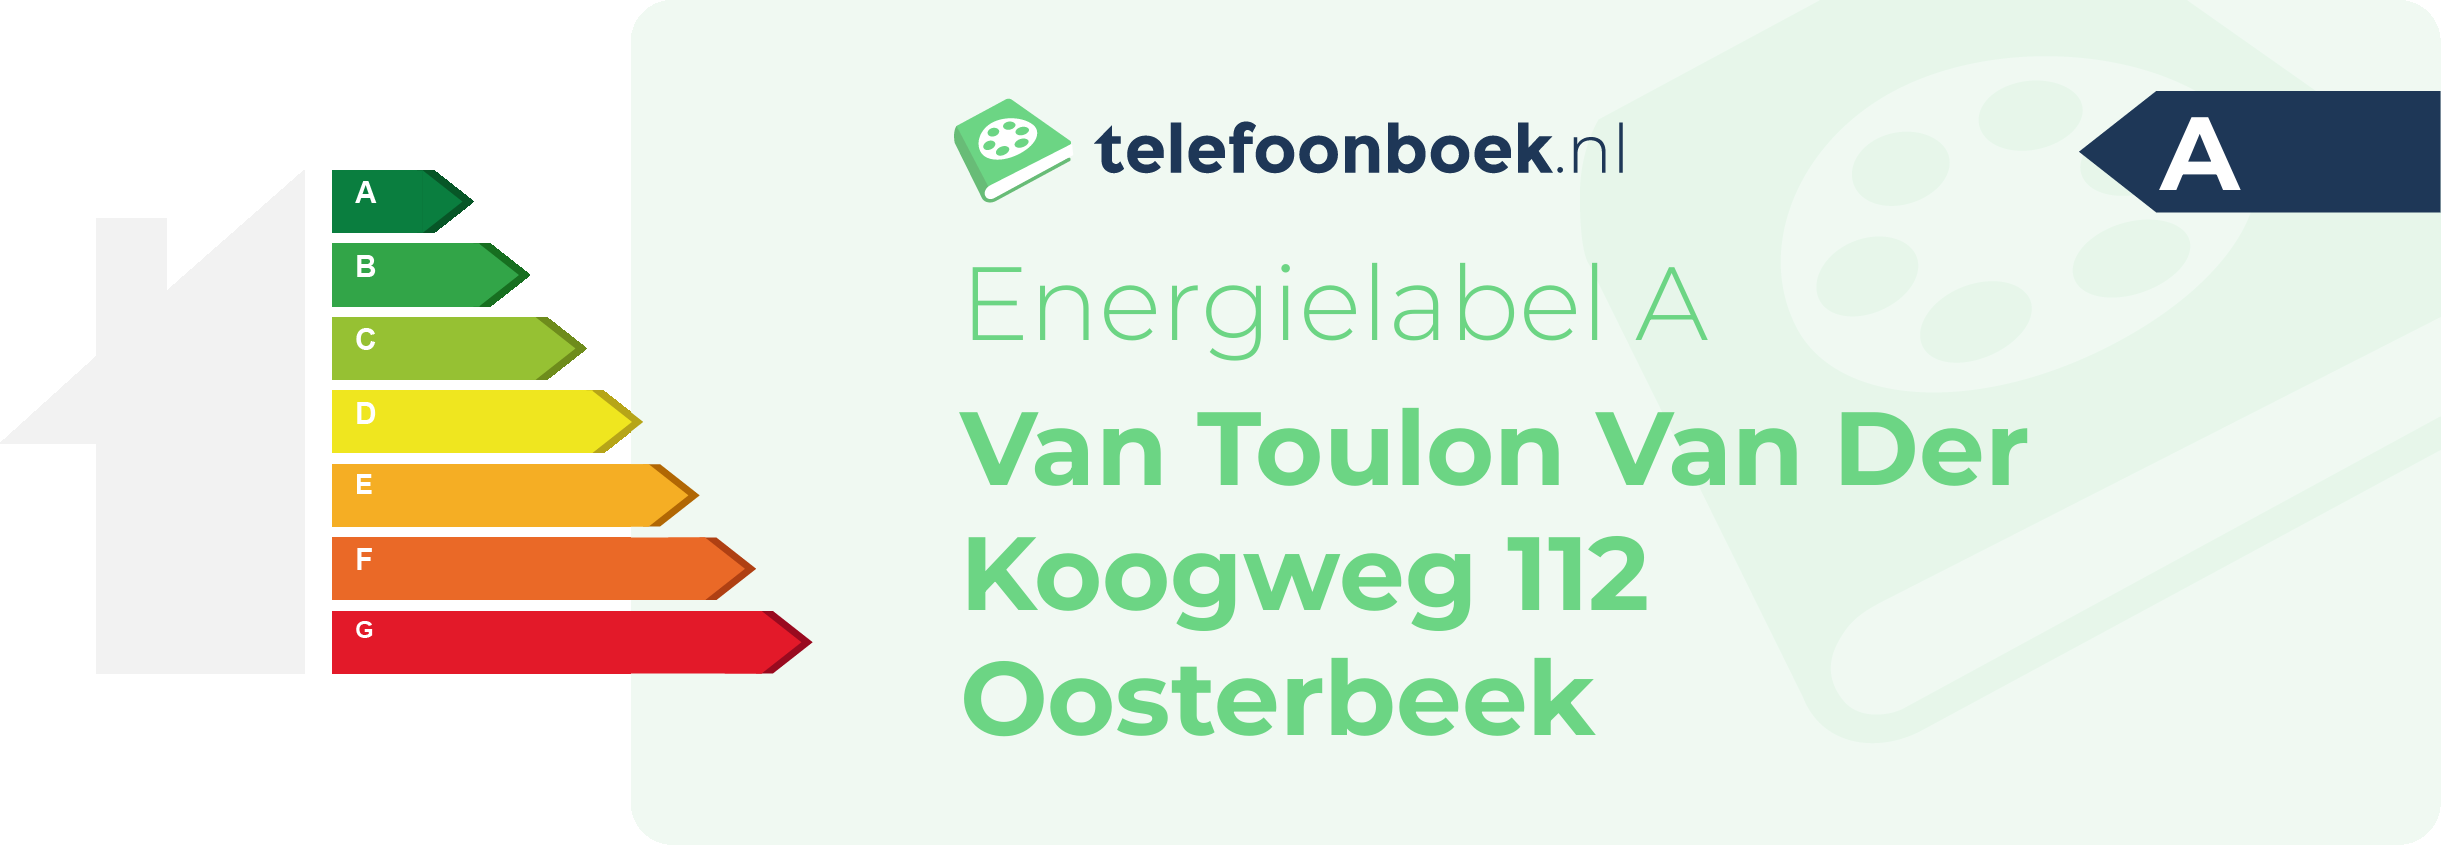 Energielabel Van Toulon Van Der Koogweg 112 Oosterbeek